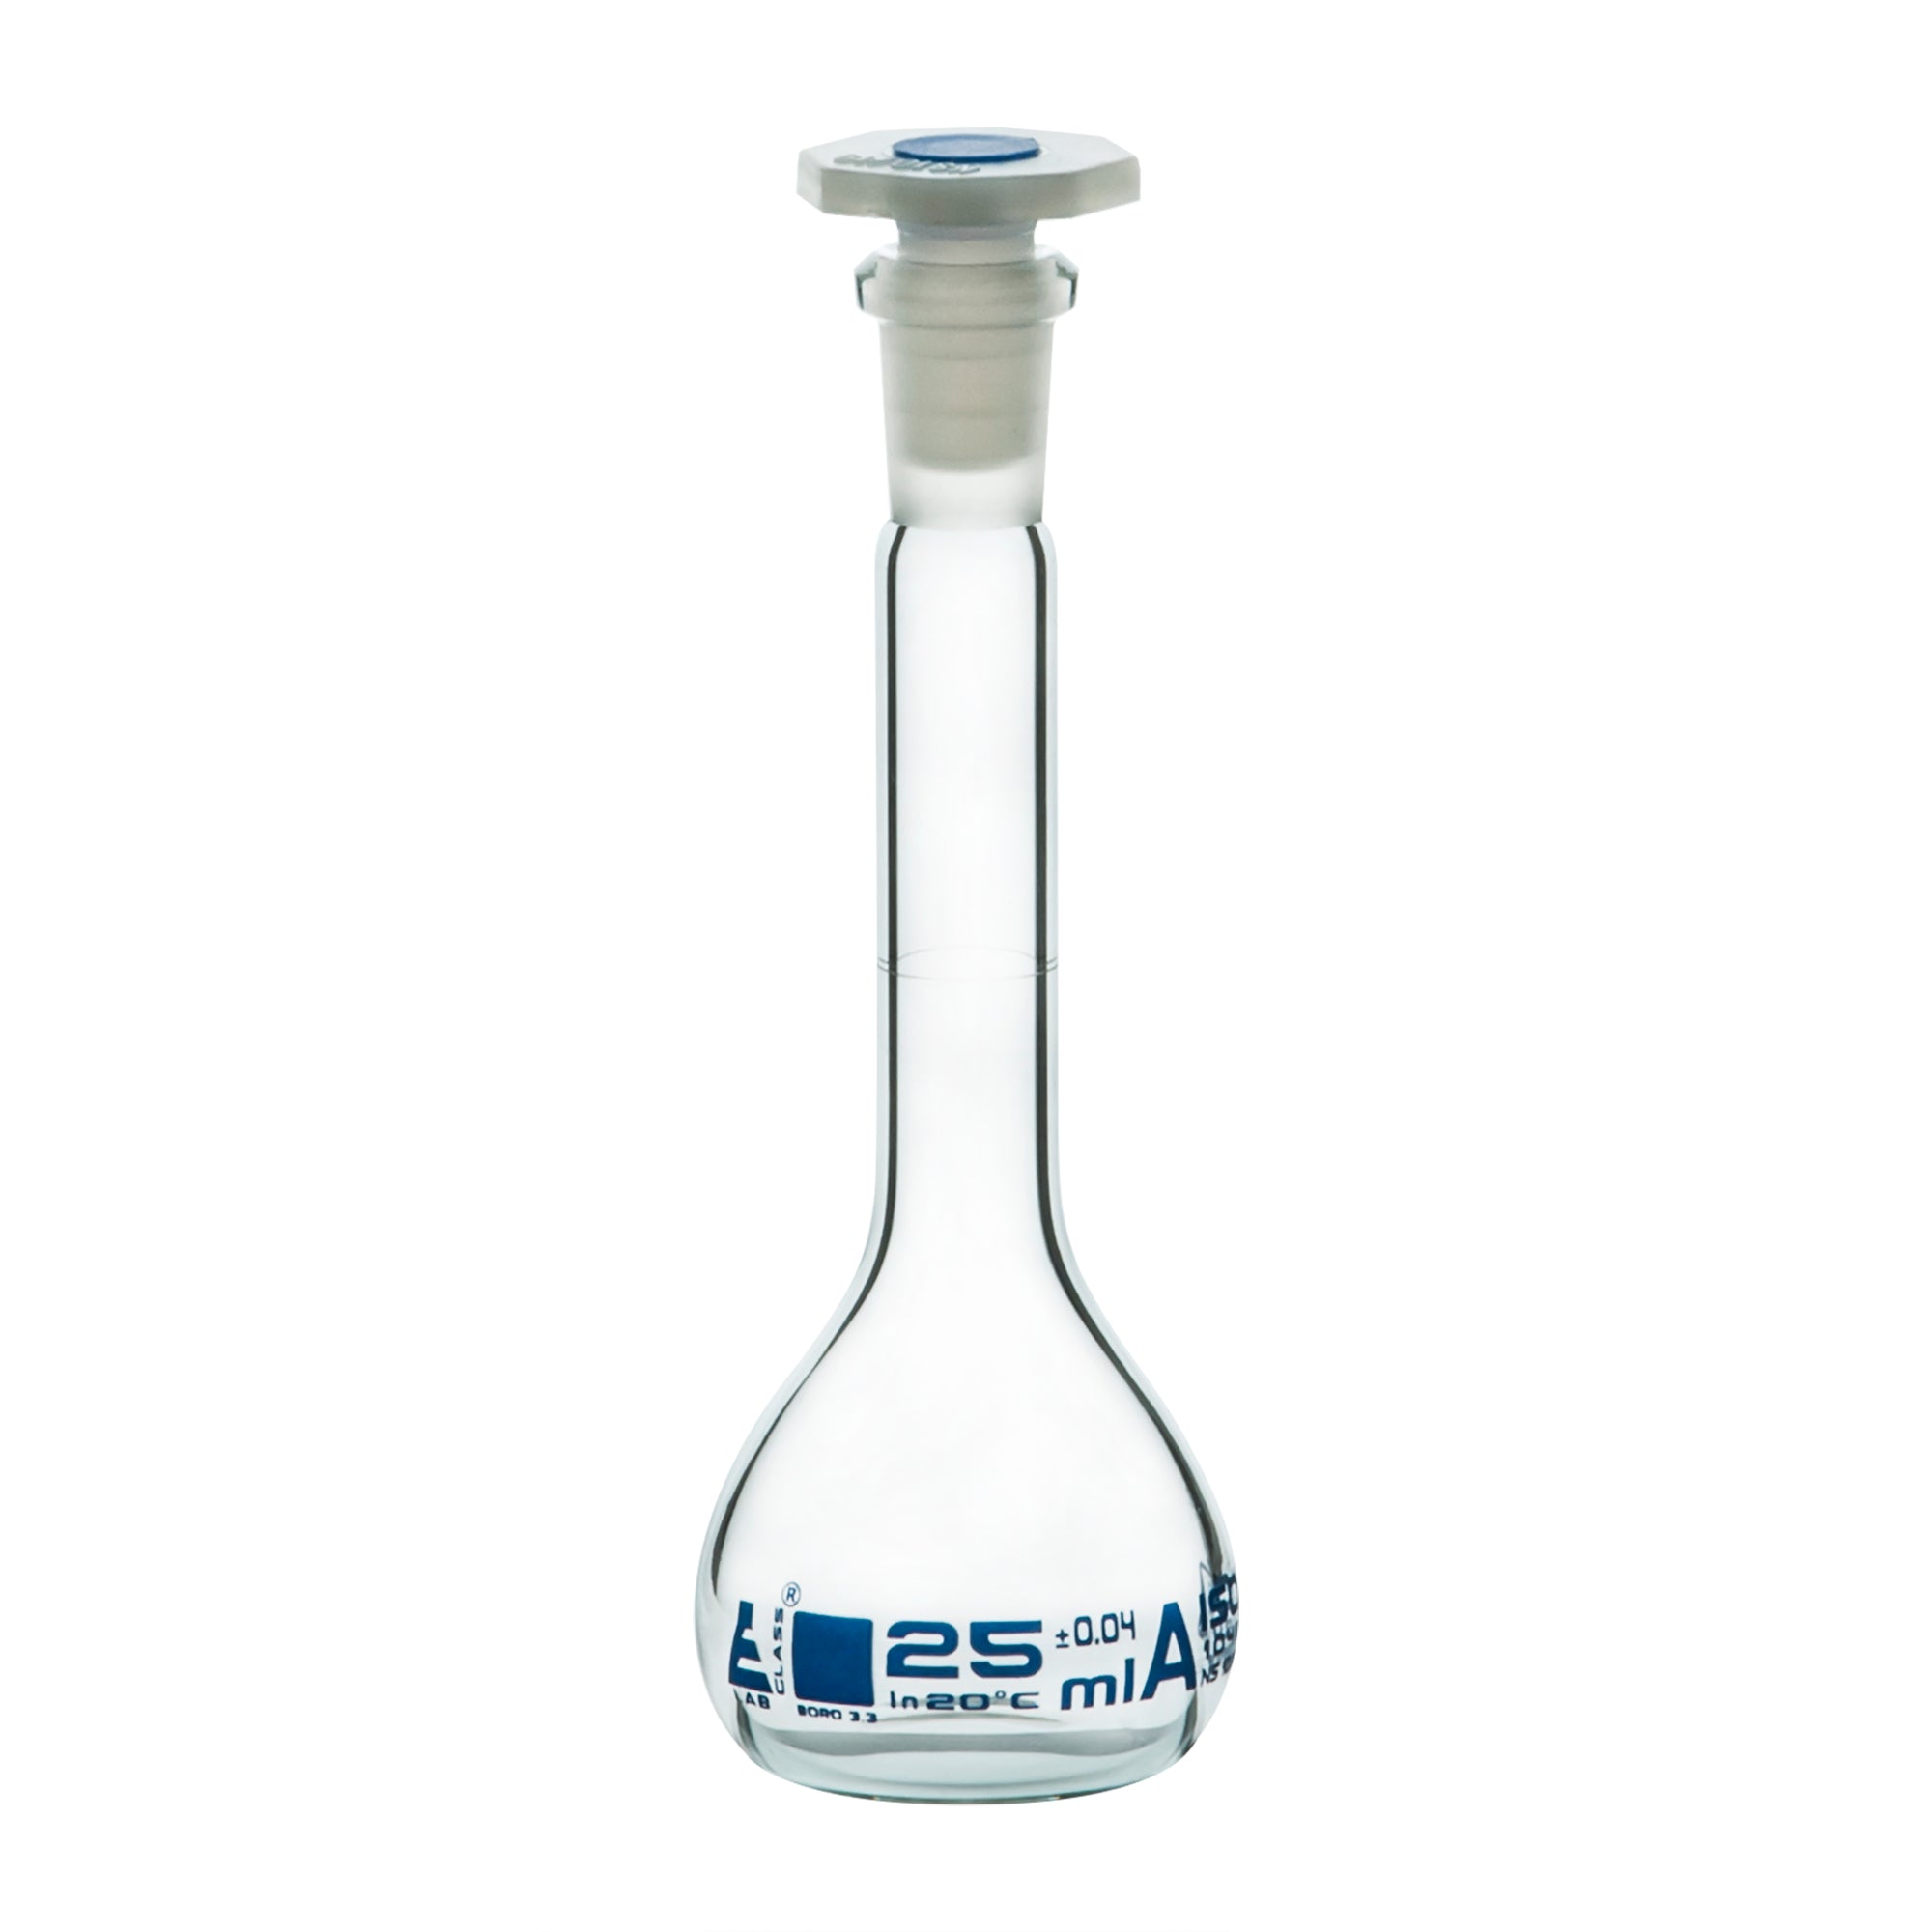 Borosilicate Glass Volumetric Flask with Polyethylene Stopper, 25ml, Class A, Blue Print, Autoclavable